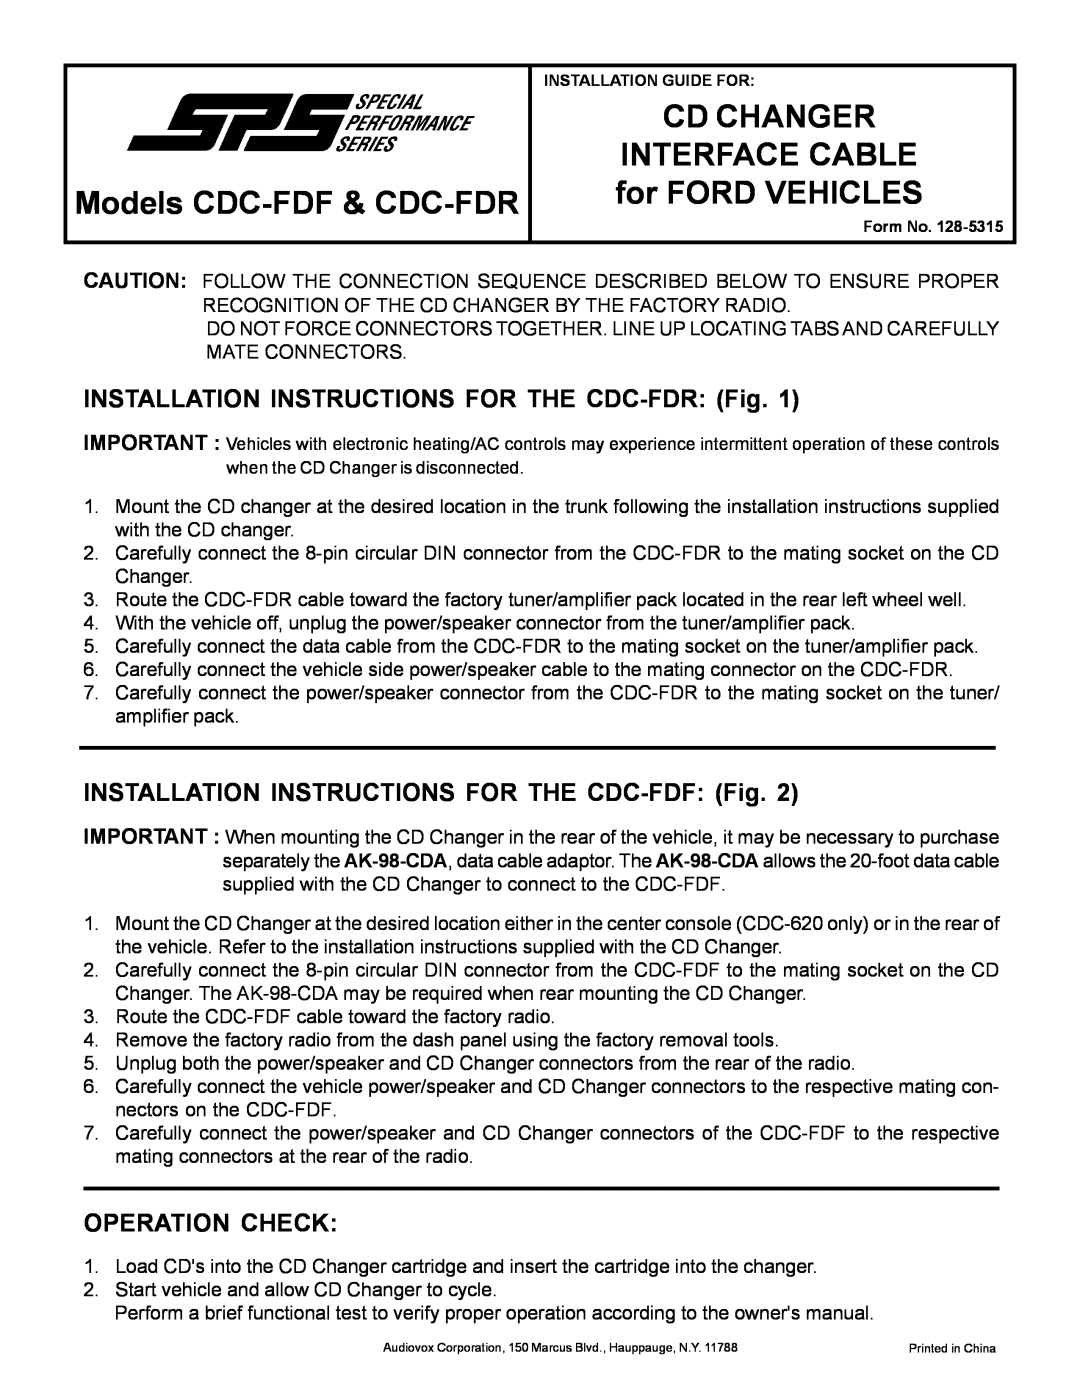 Audiovox CDC-FDF installation instructions INSTALLATION INSTRUCTIONS FOR THE CDC-FDR Fig, Operation Check 